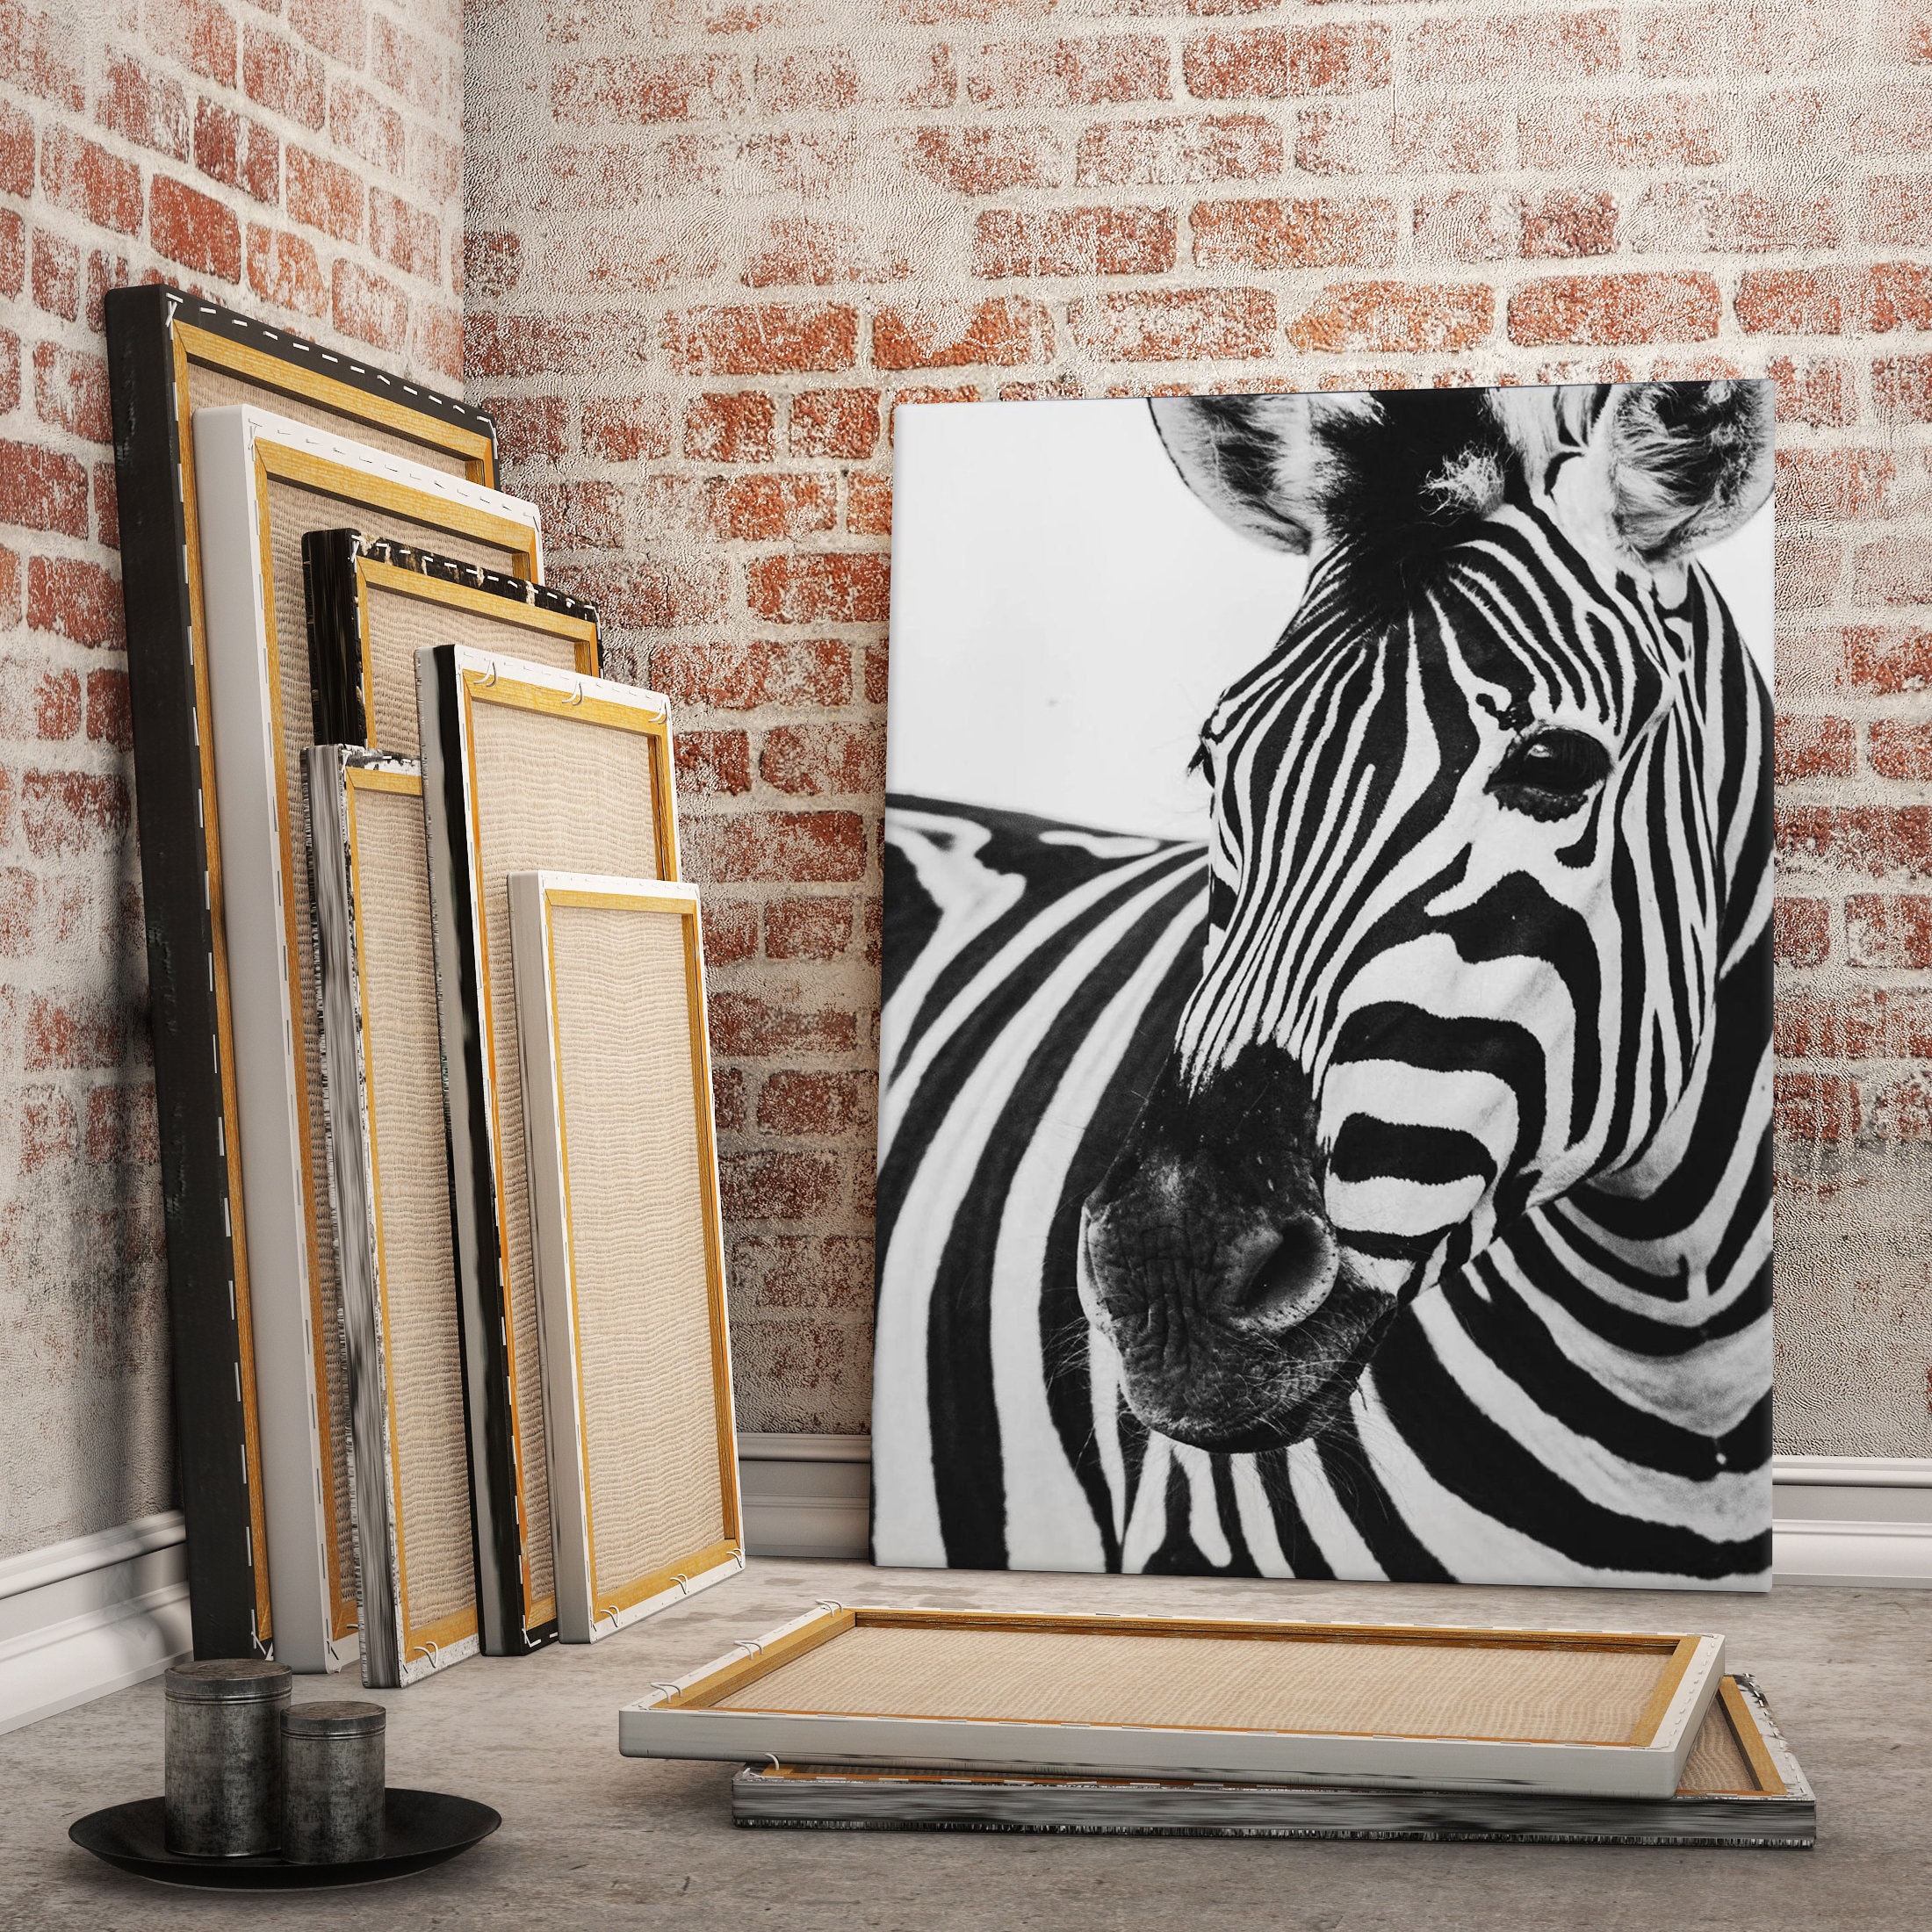 Zebra poster